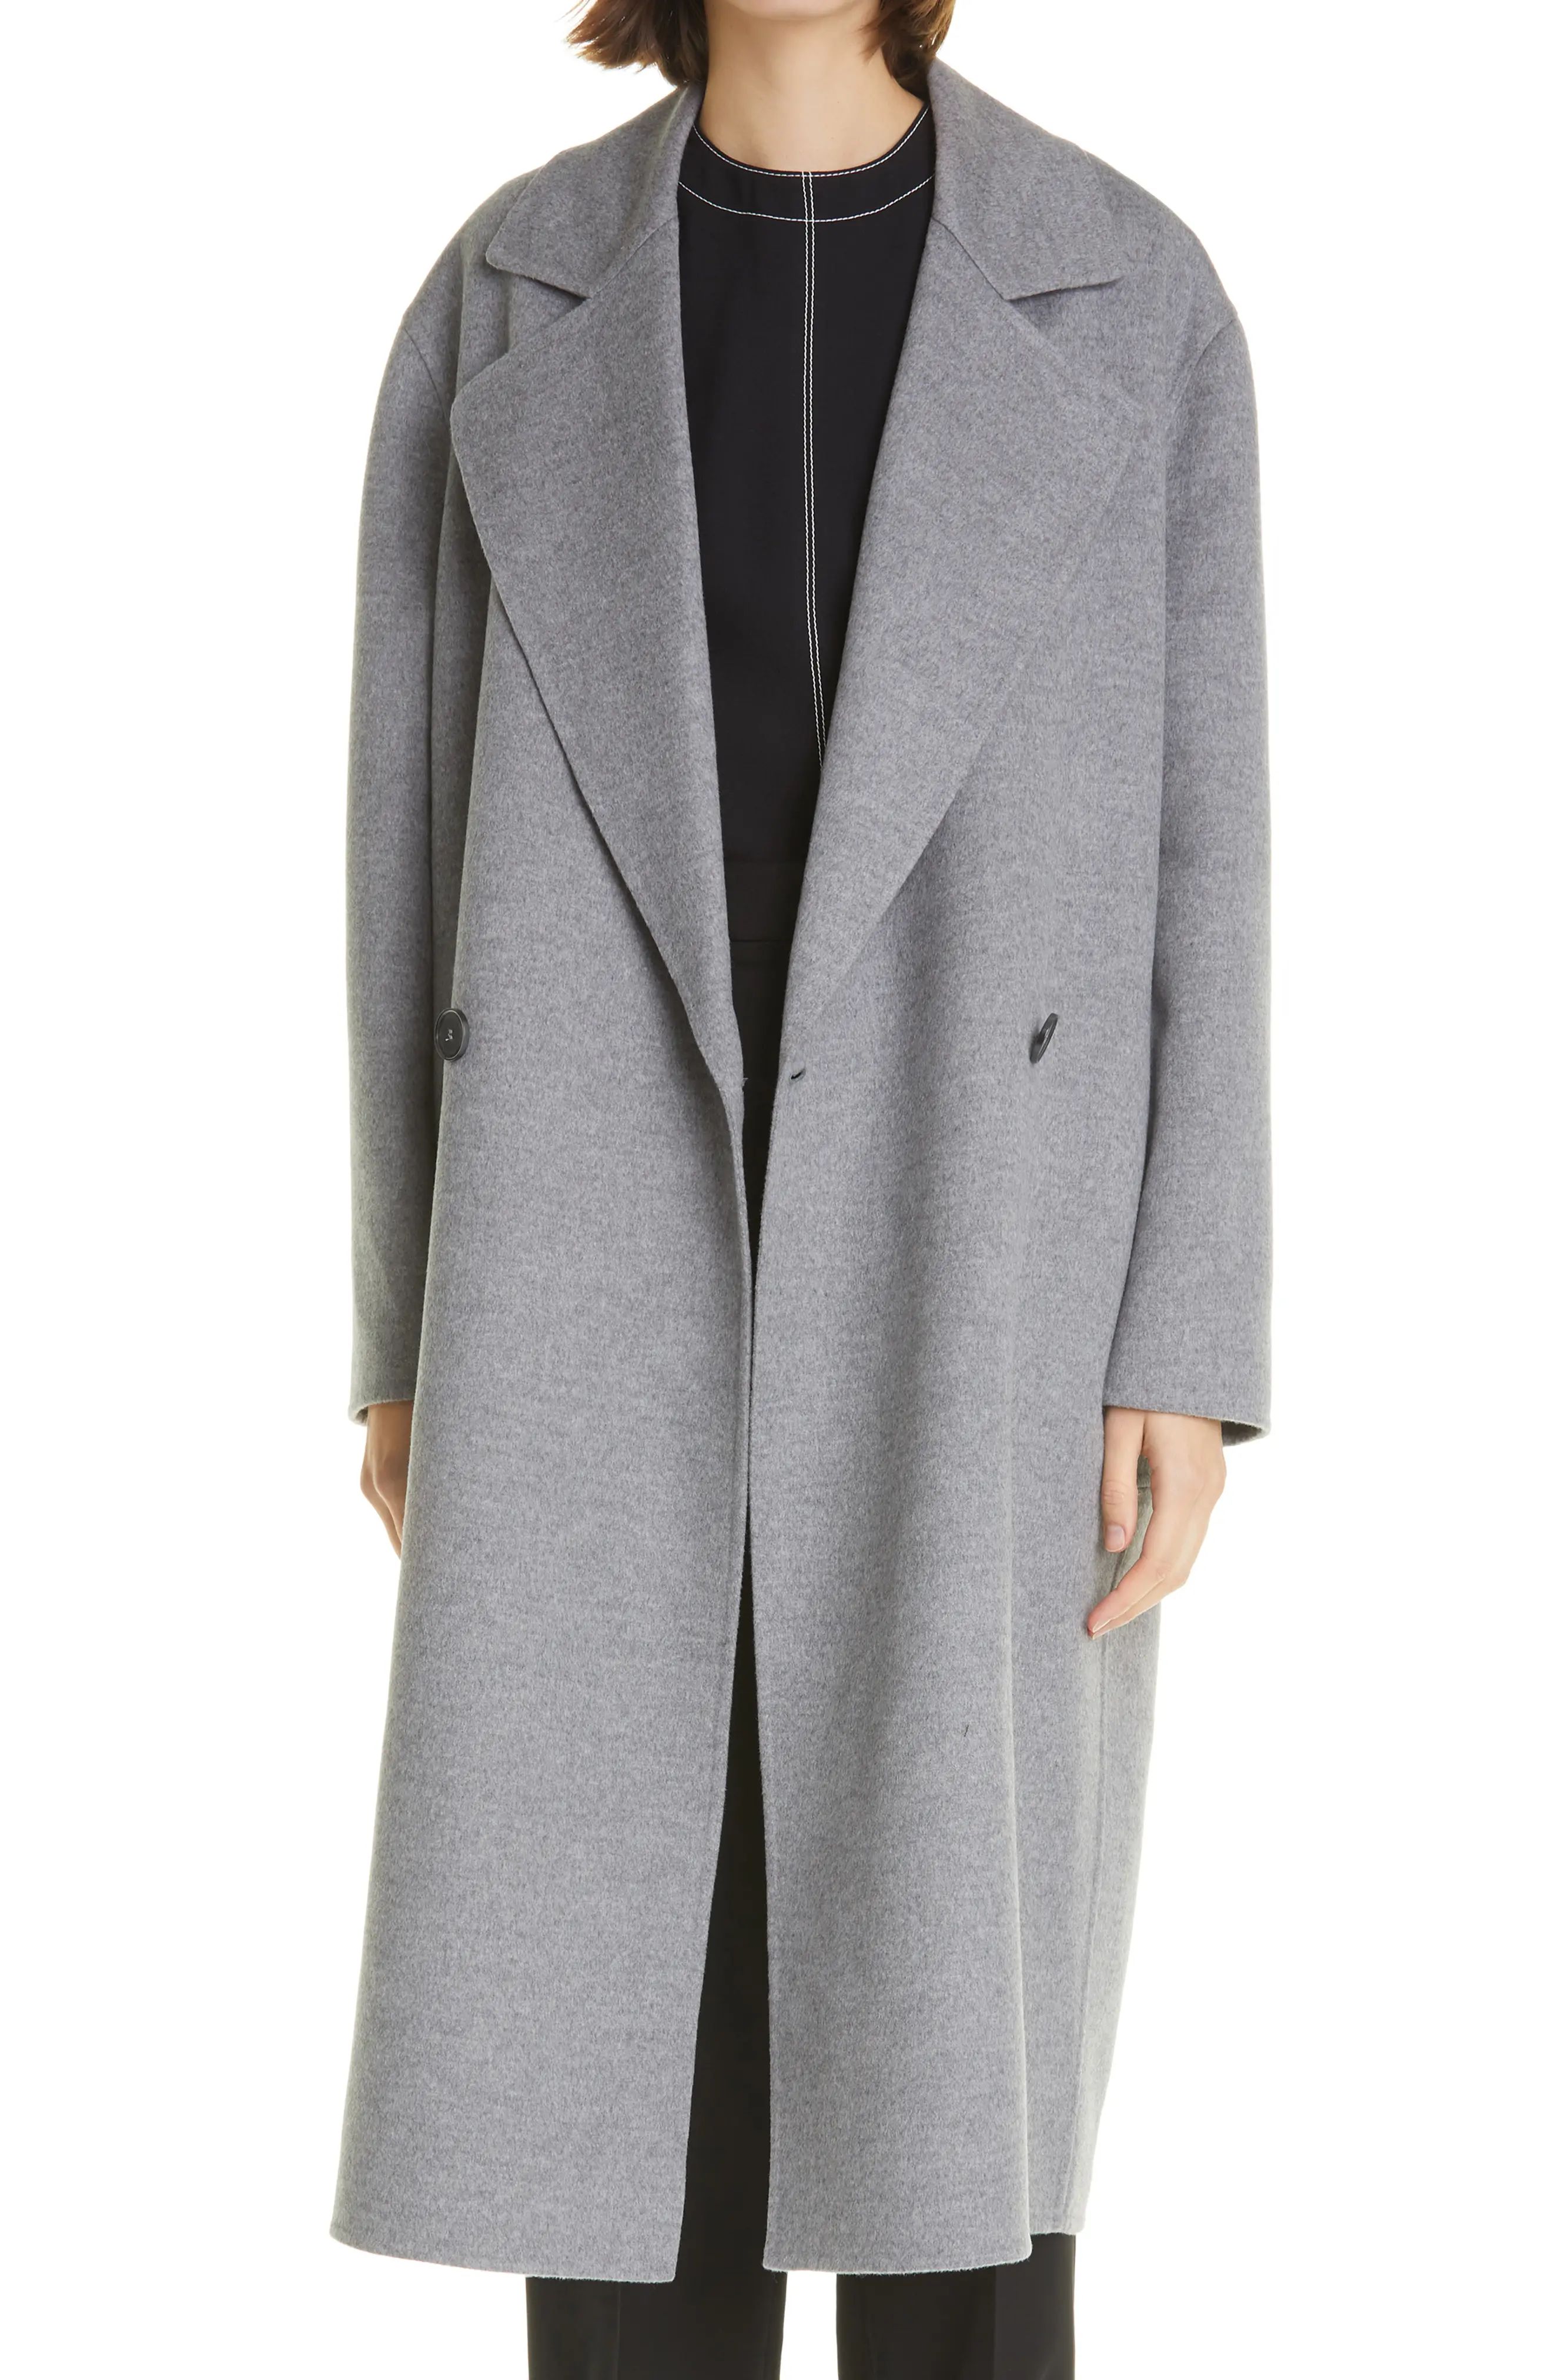 Stella McCartney Erika Double Breasted Wool Coat, Size 6 Us in Light Grey Melange at Nordstrom | Nordstrom